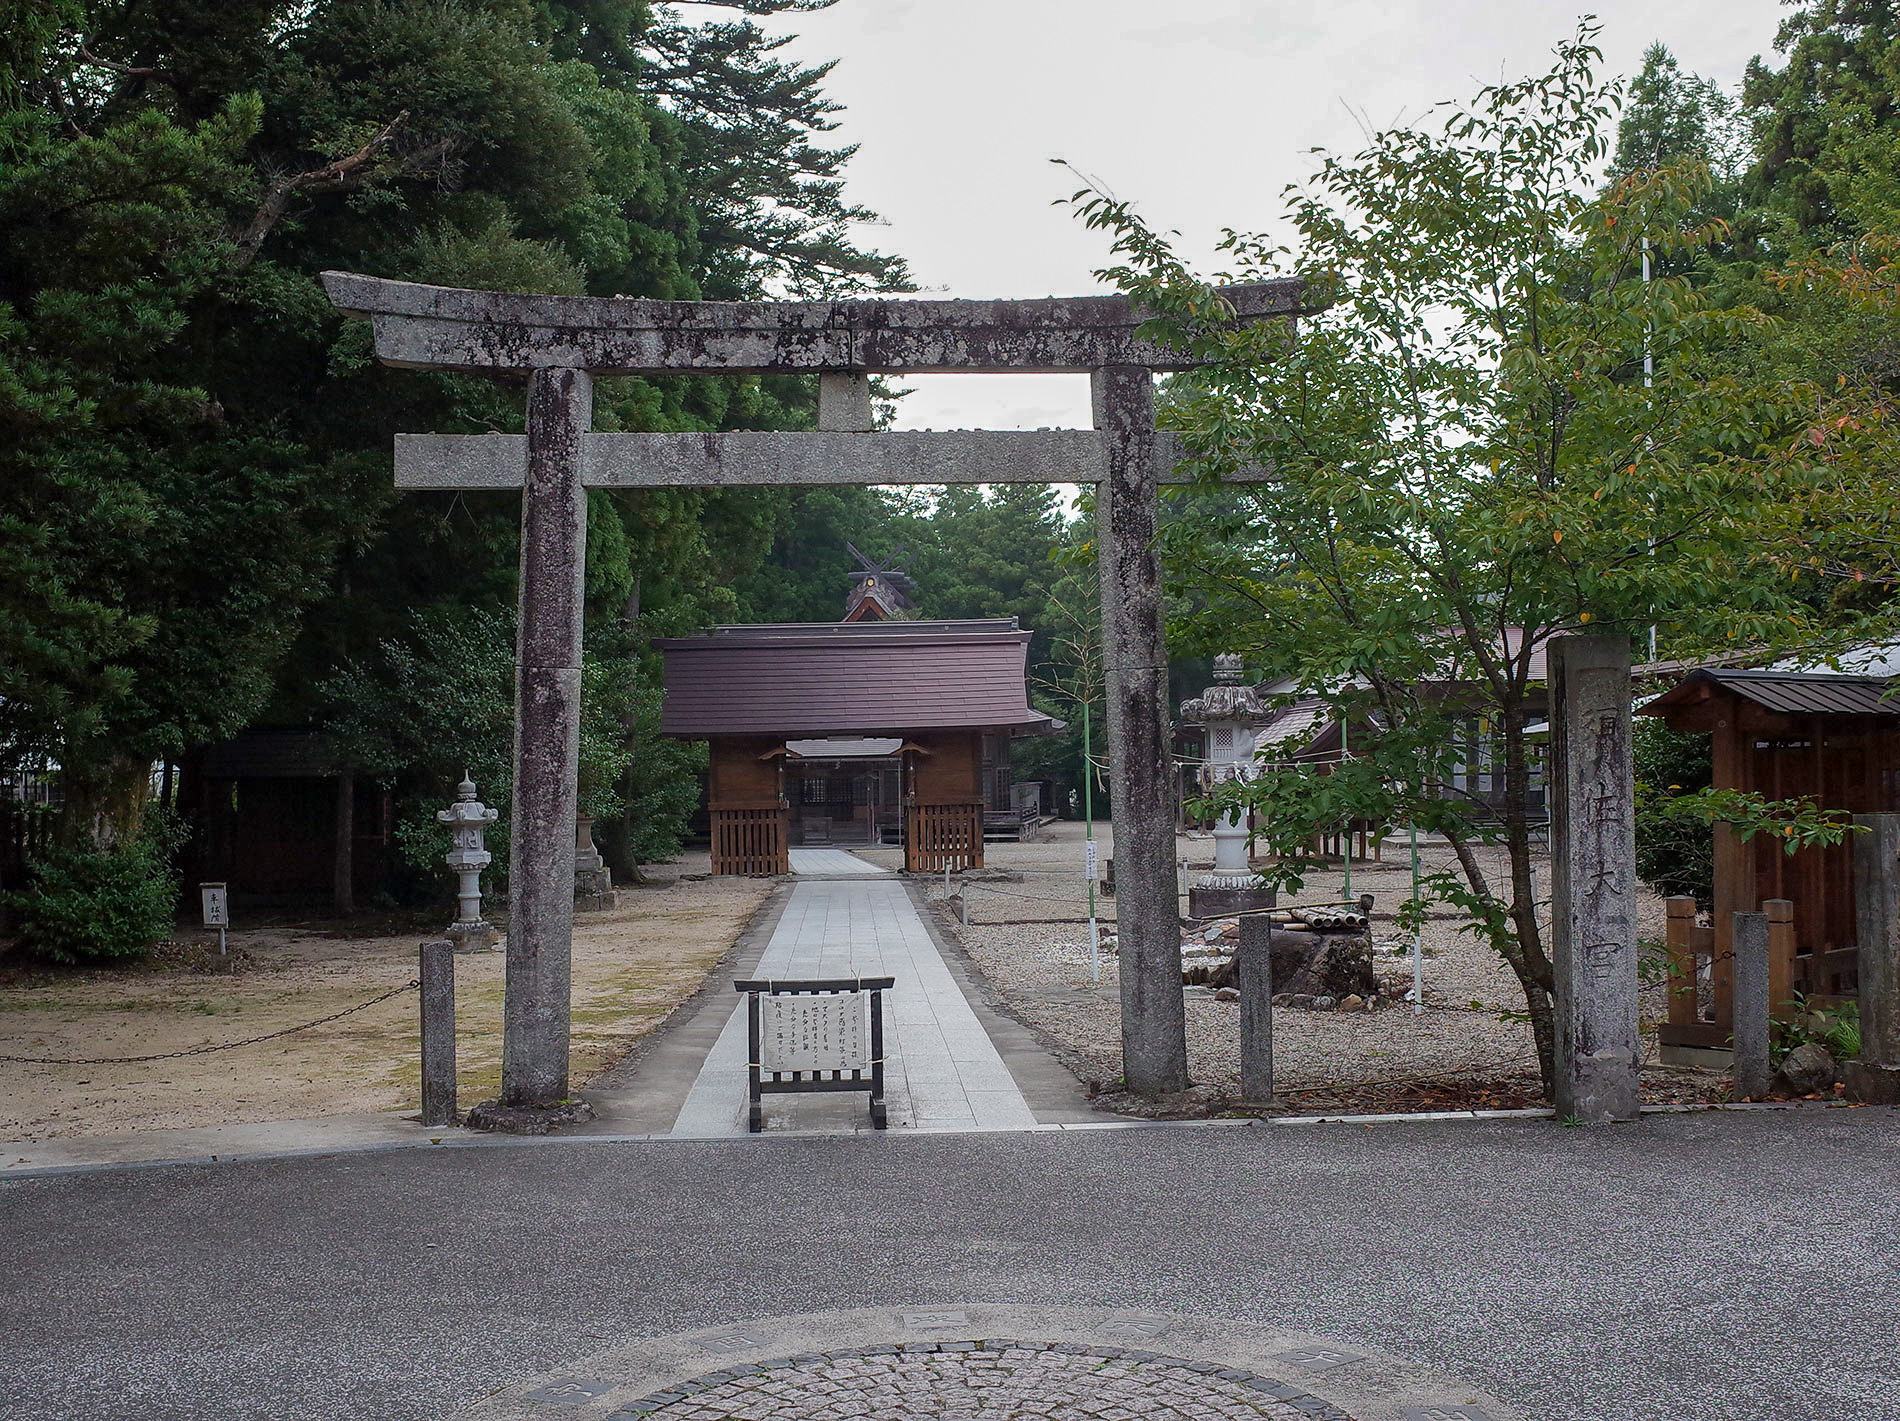 須佐神社 / 出雲旅行 2020 / Susa Shrine 2020